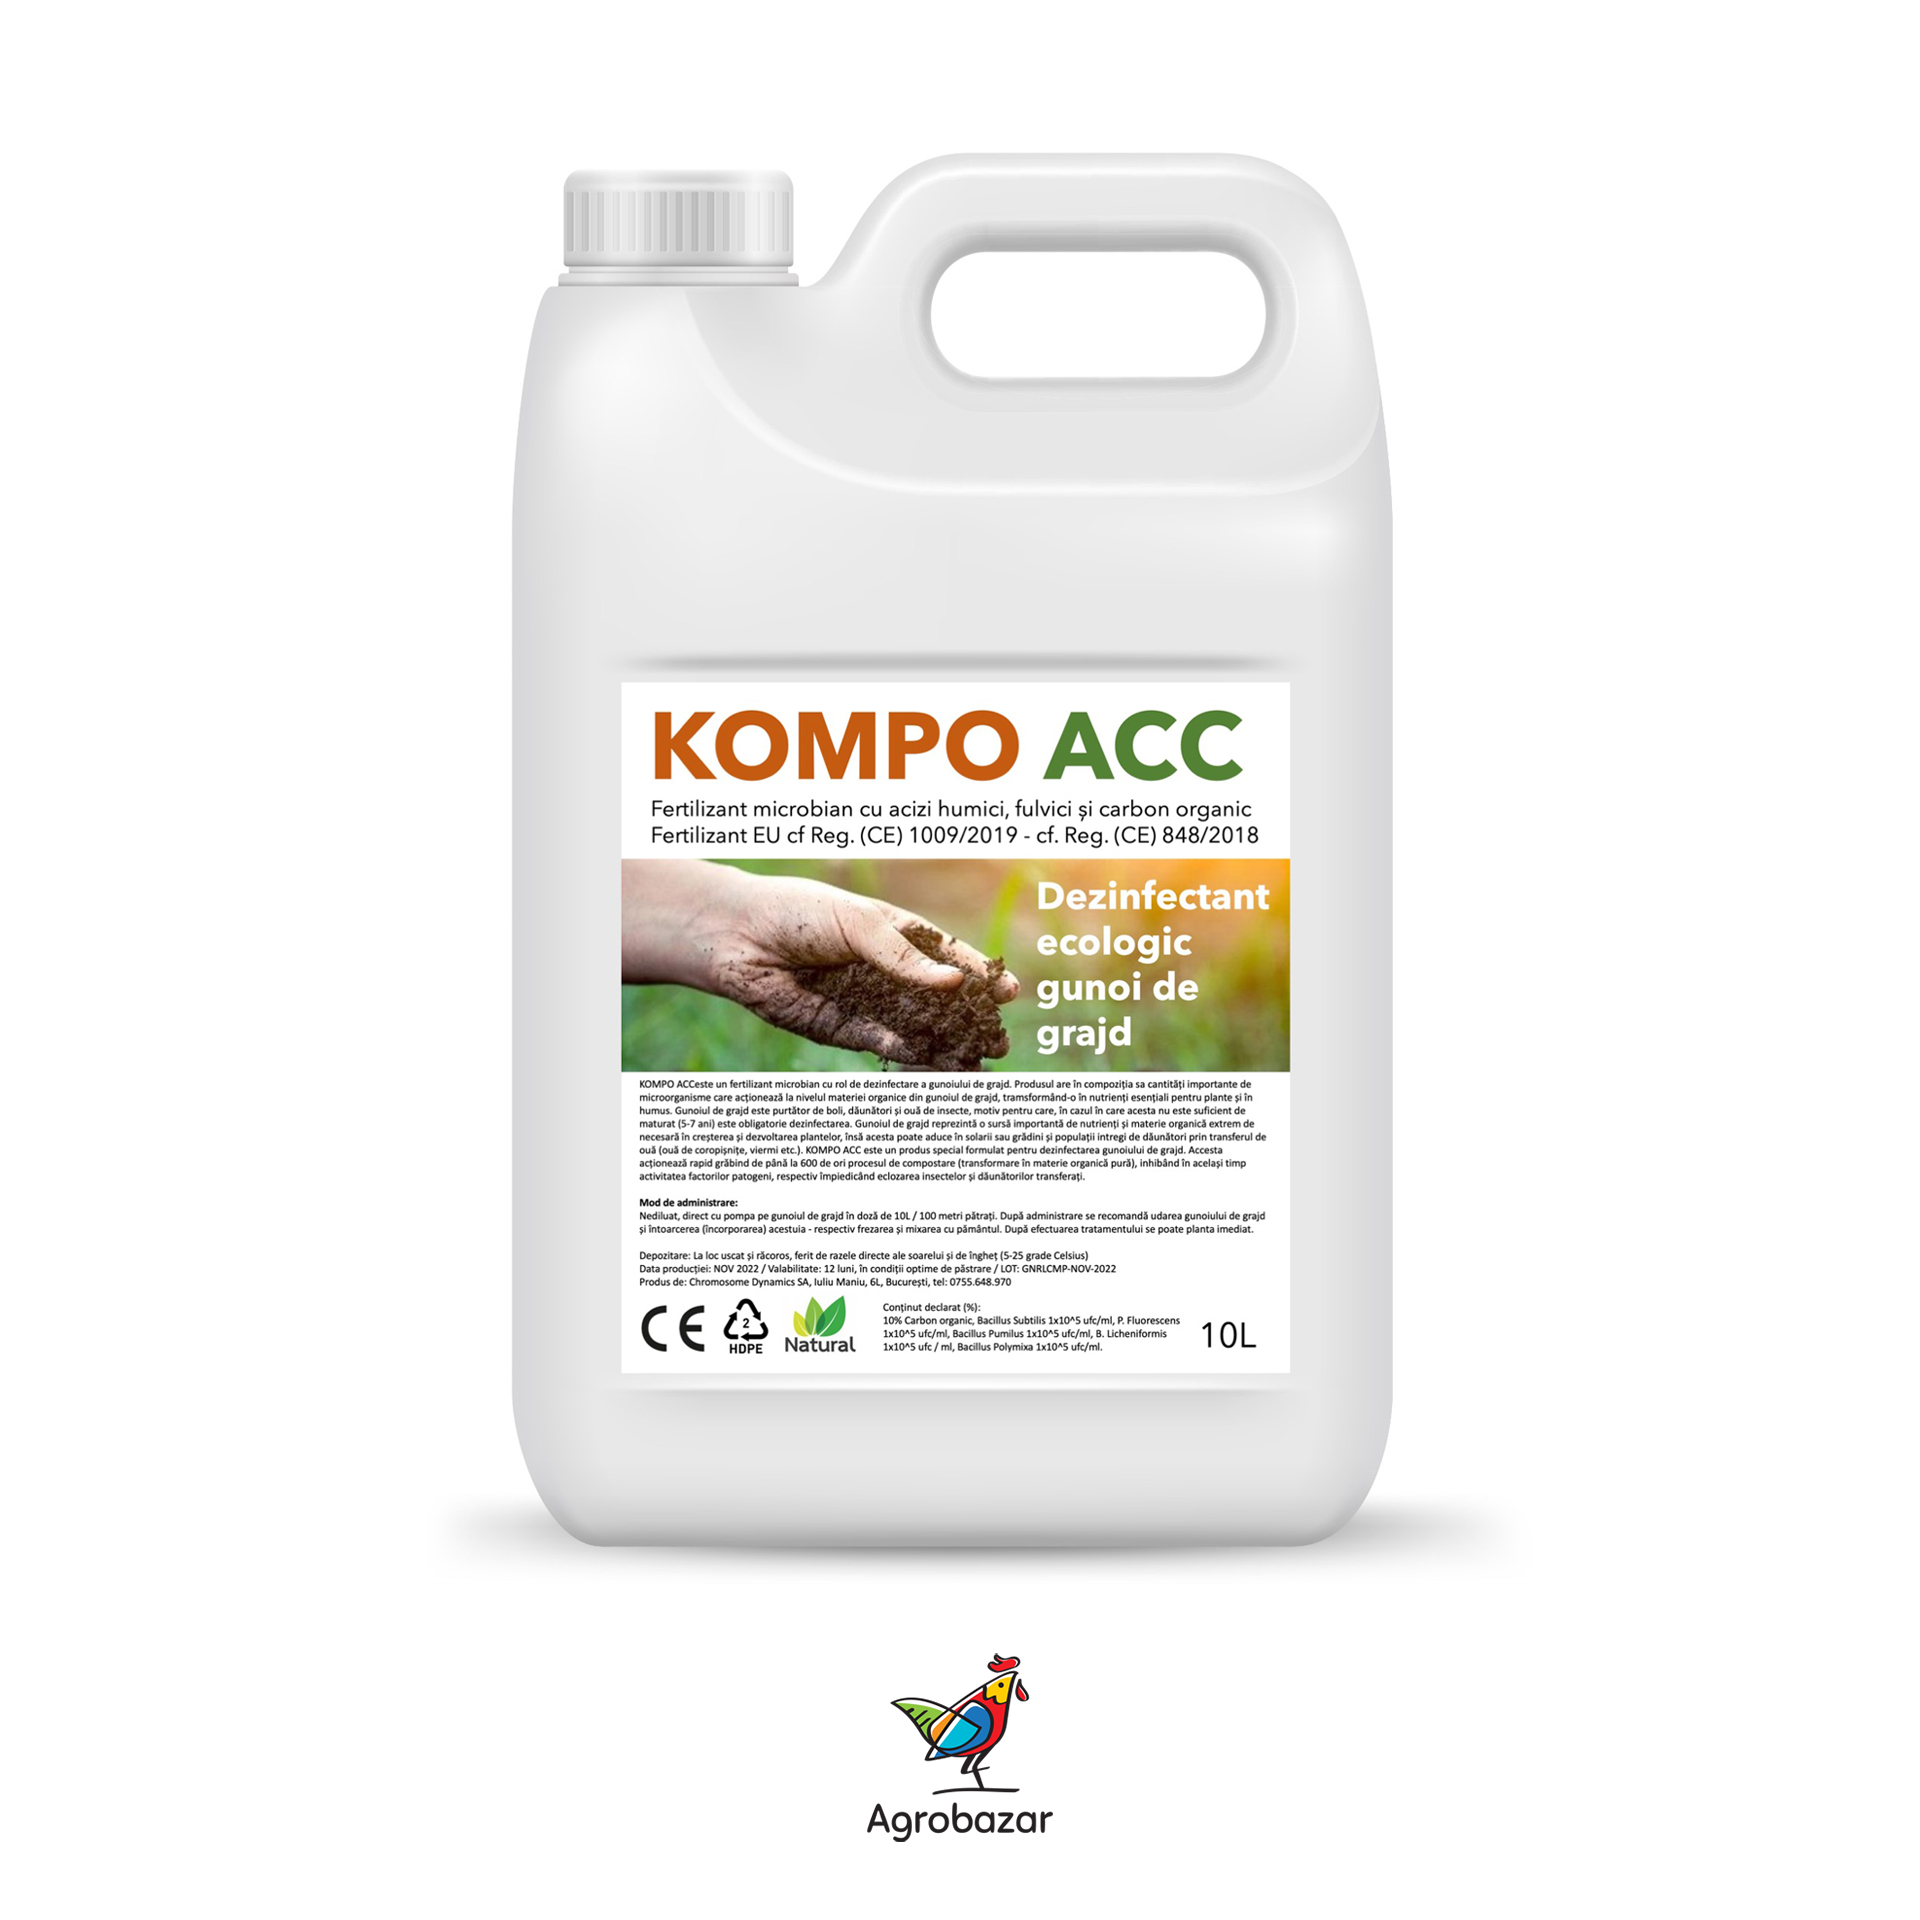 https://www.agrobazar.ro/kompo-acc-fertilizant-eu-cf-reg-ce-1009-2019-dezinfectant-ecologic-gunoi-de-grajd-cf-reg-ce-848-2018-10l/